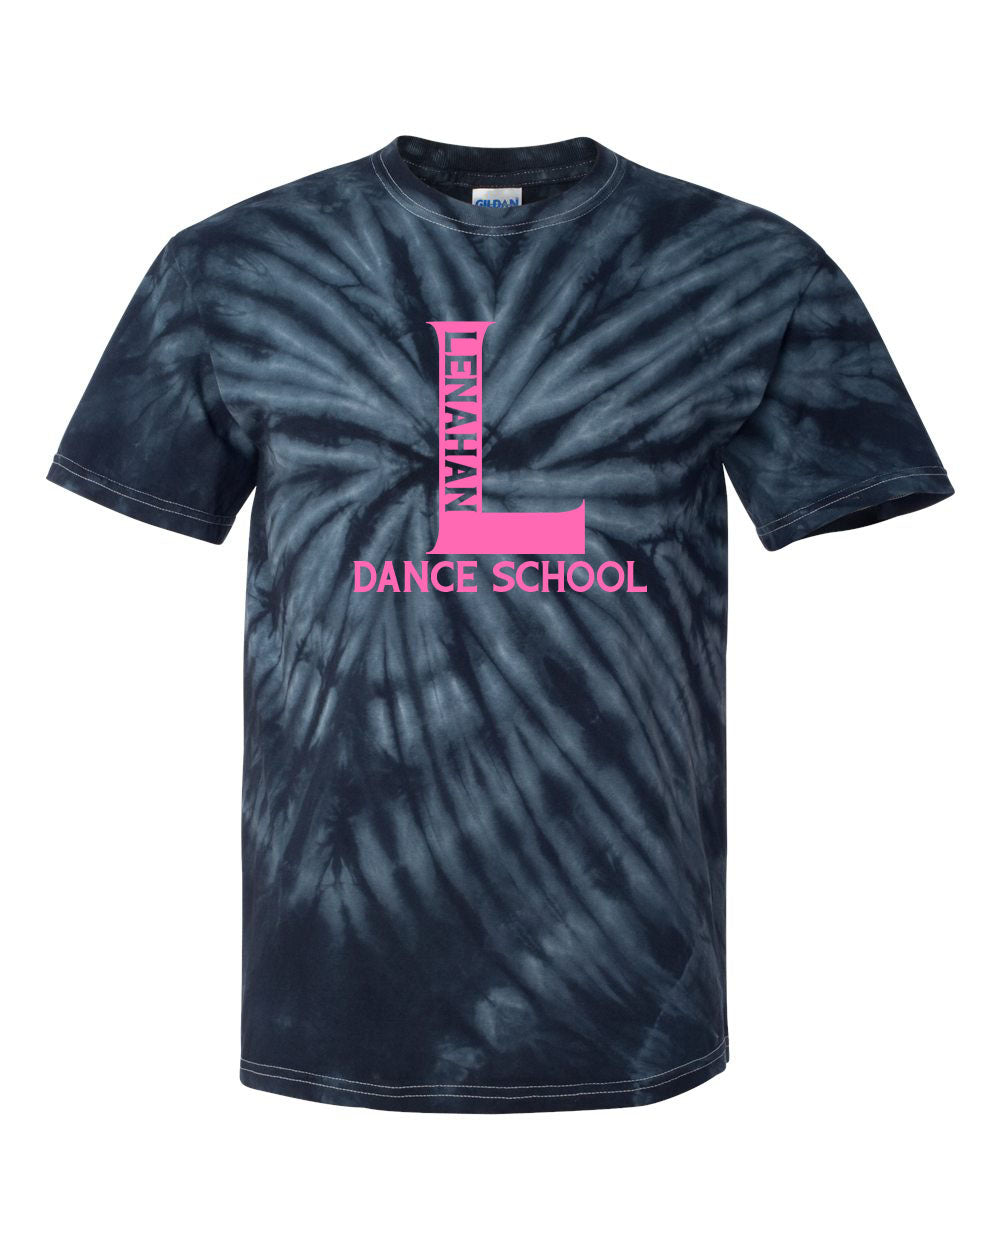 Lenahan Dance Design 1 Tie Dye t-shirt